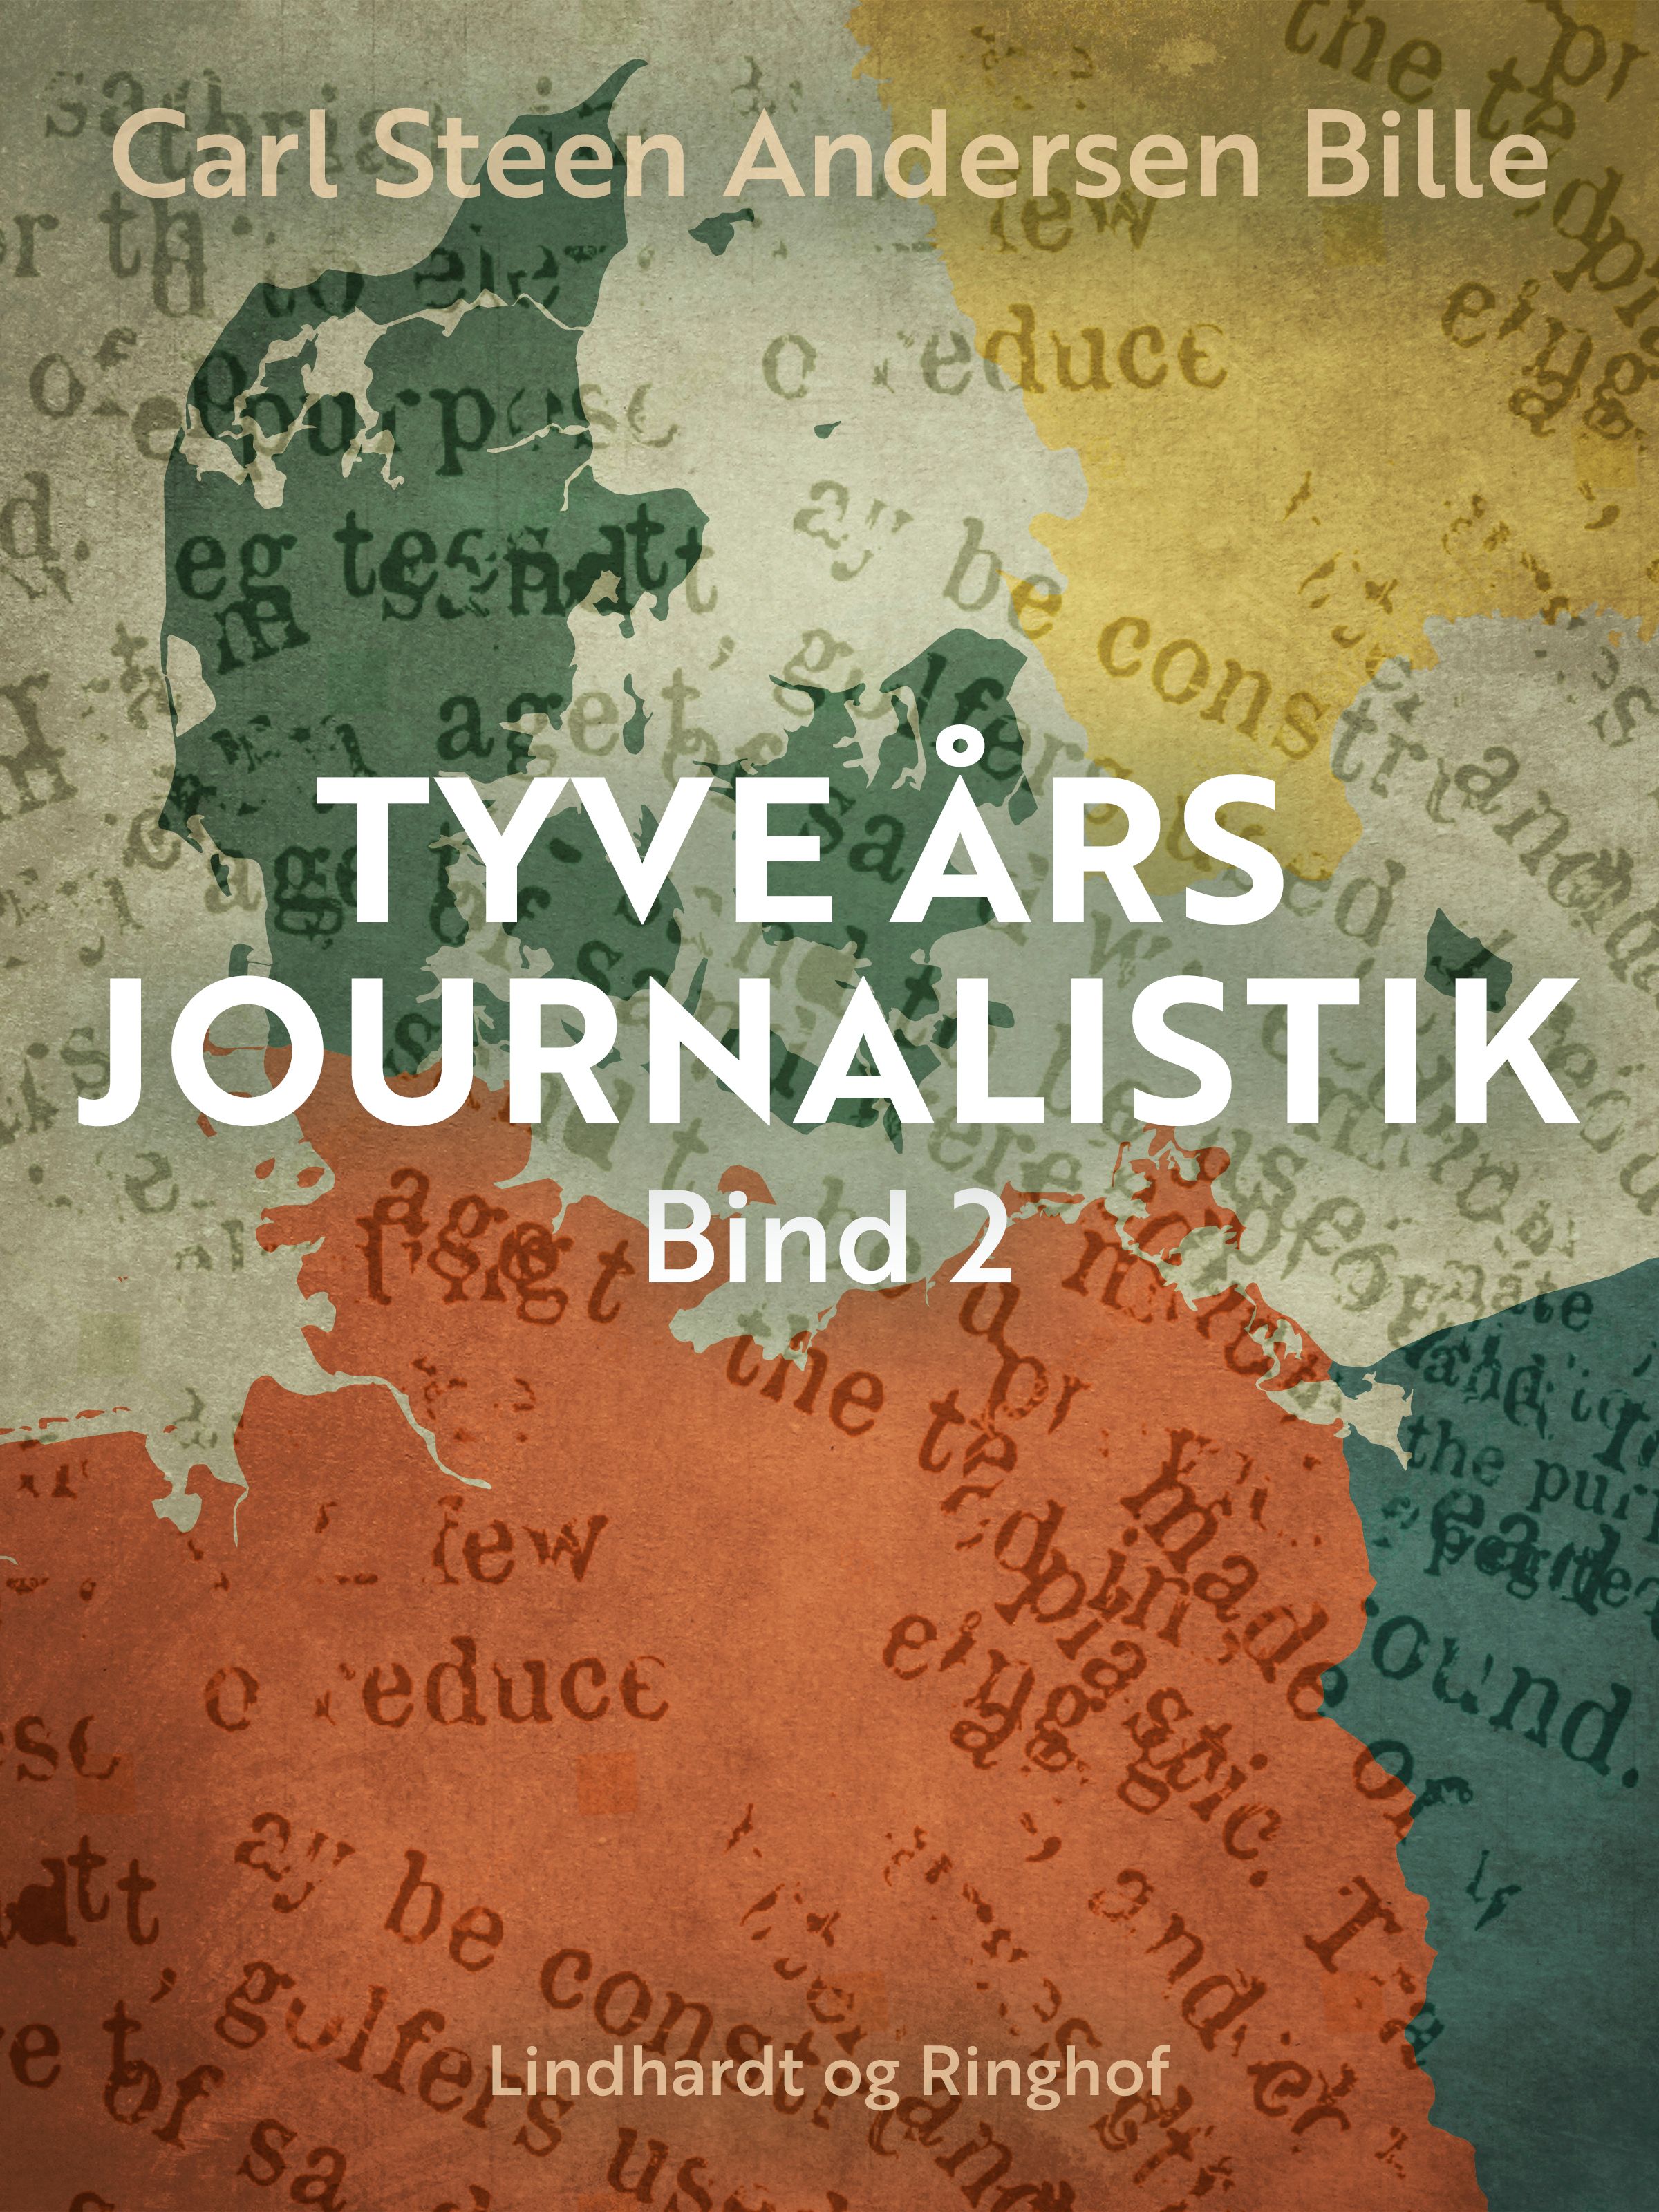 Tyve års journalistik. Bind 2, e-bok av Carl Steen Andersen Bille